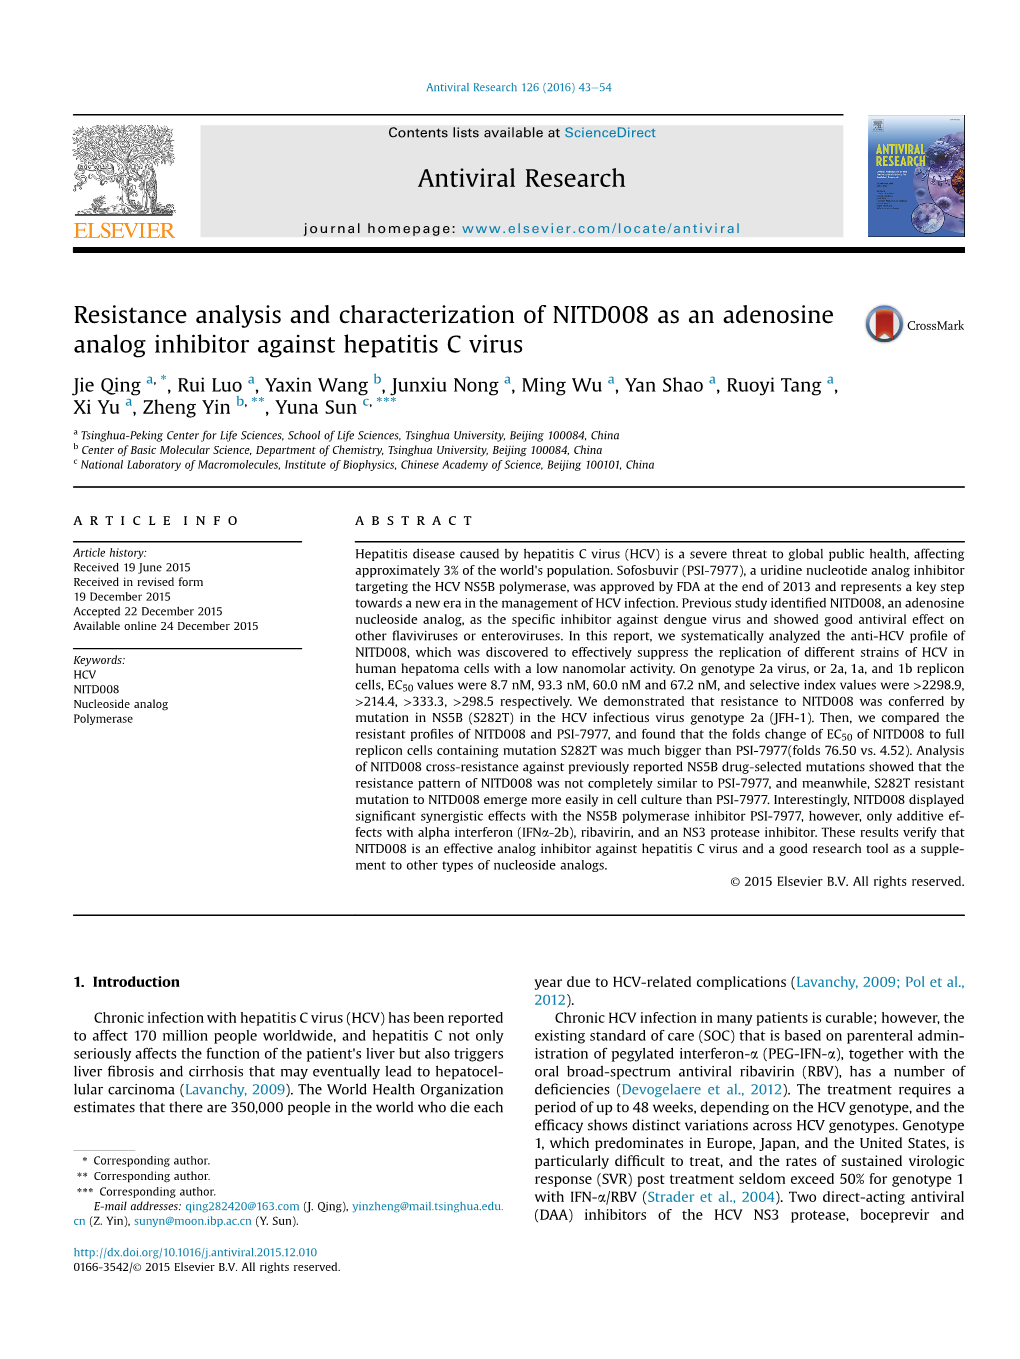 Resistance Analysis and Characterization of NITD008 As an Adenosine Analog Inhibitor Against Hepatitis C Virus